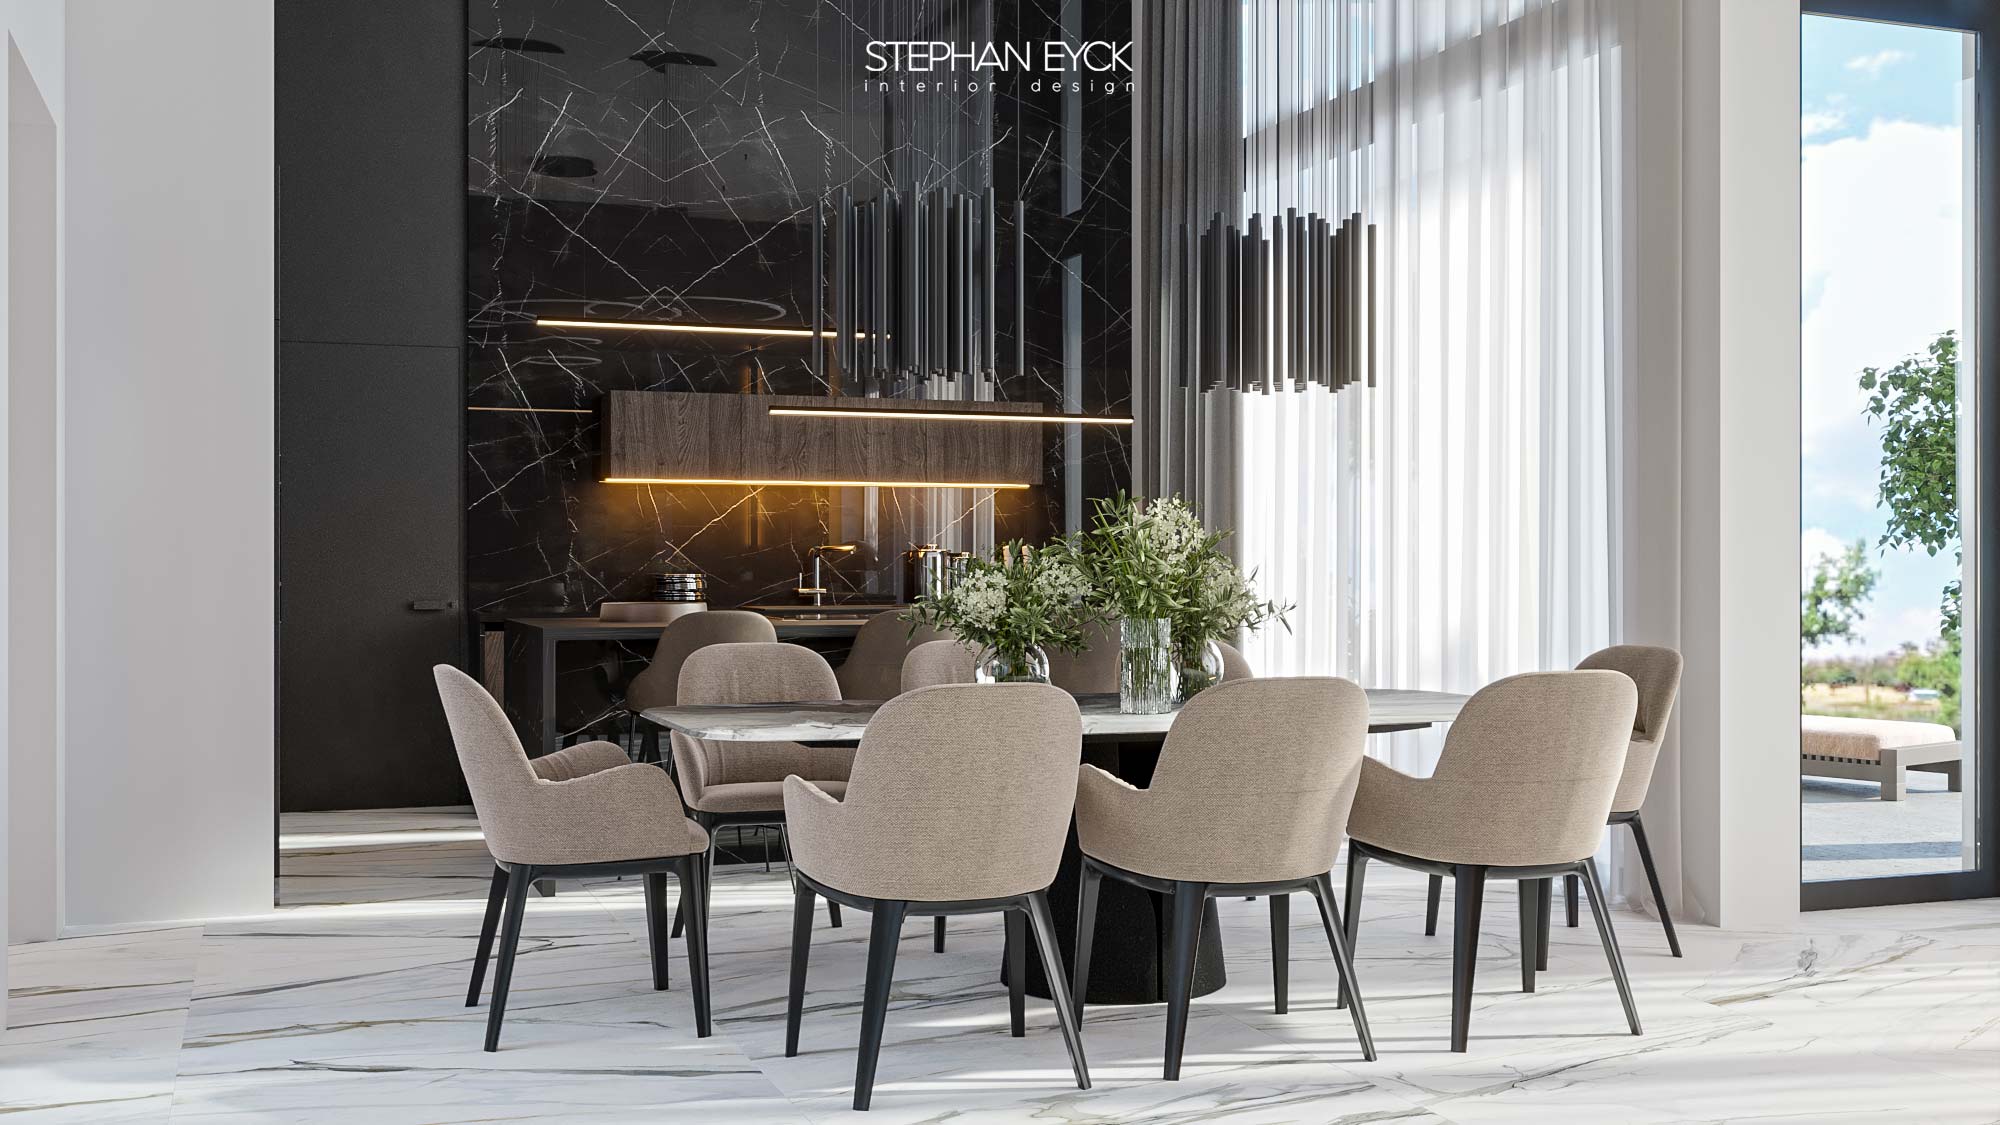 Stephan Eyck Design interior